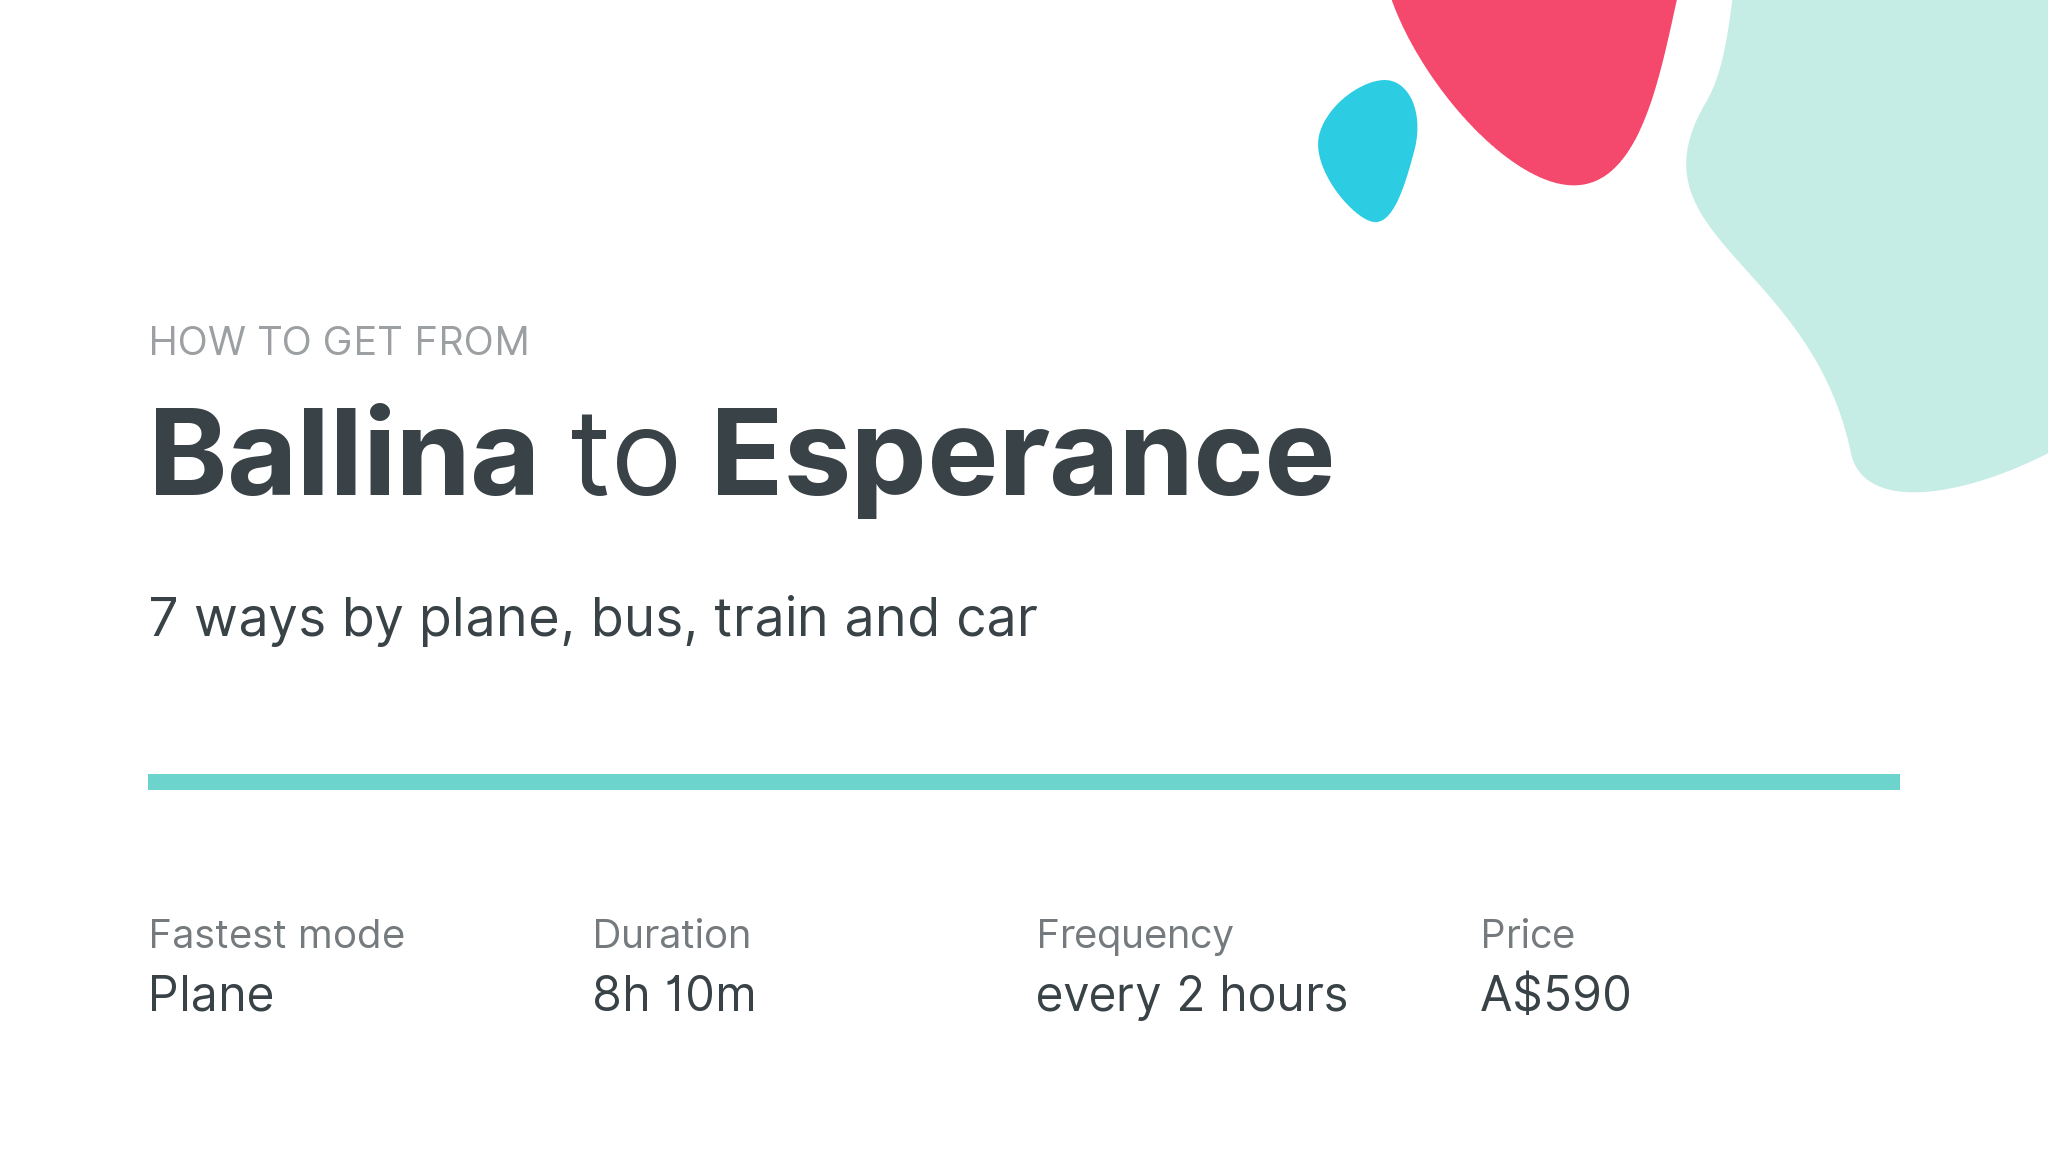 How do I get from Ballina to Esperance